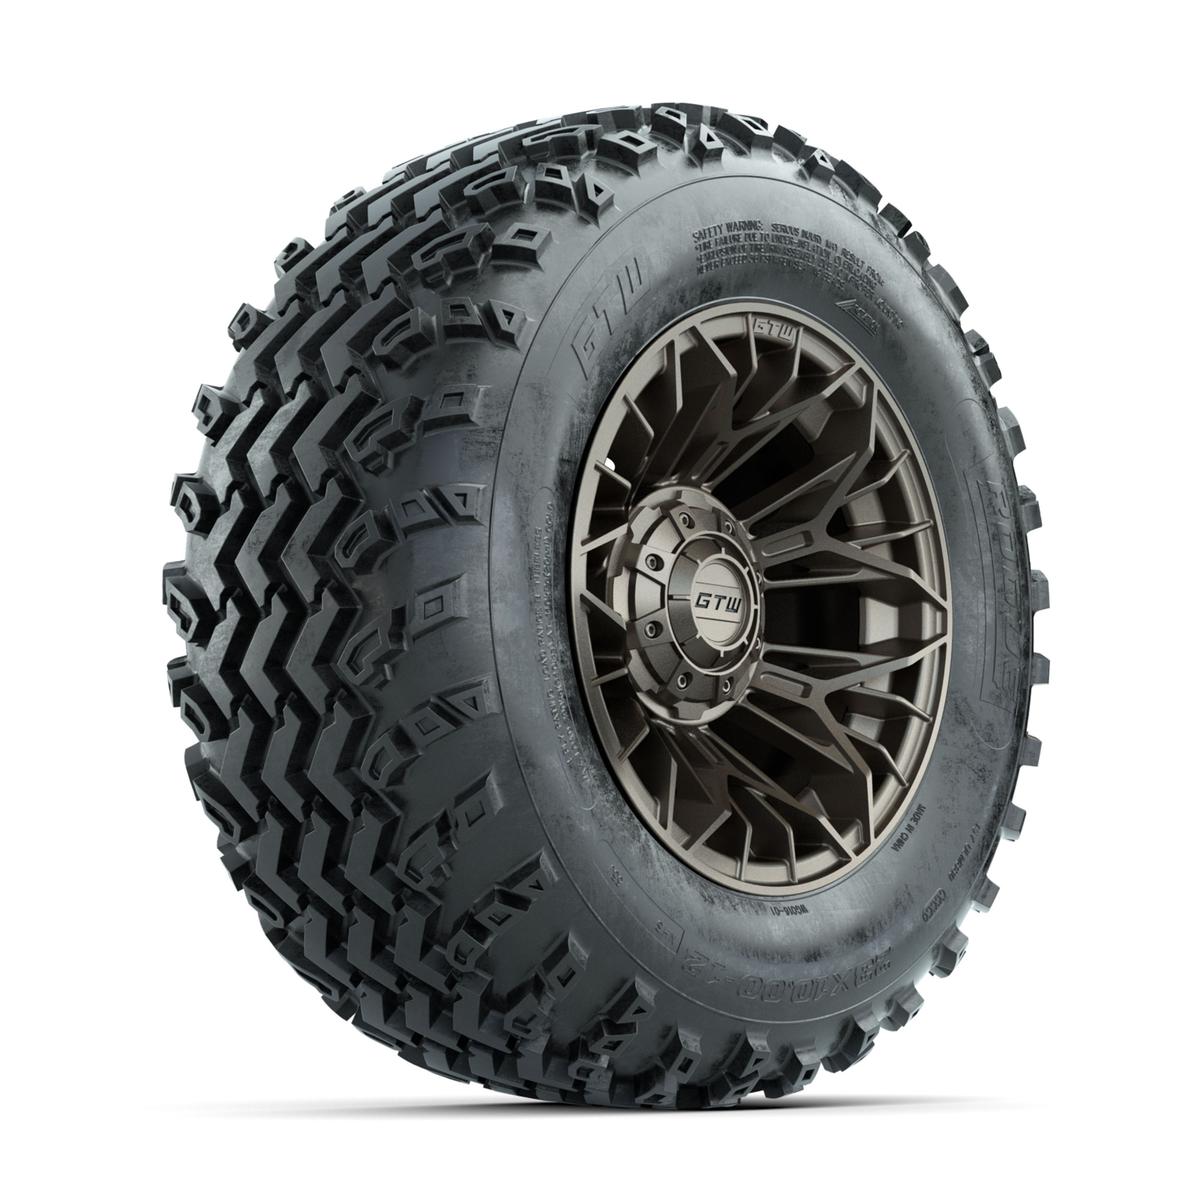 GTW Stellar Matte Bronze 12 in Wheels with 23x10.00-12 Rogue All Terrain Tires – Full Set